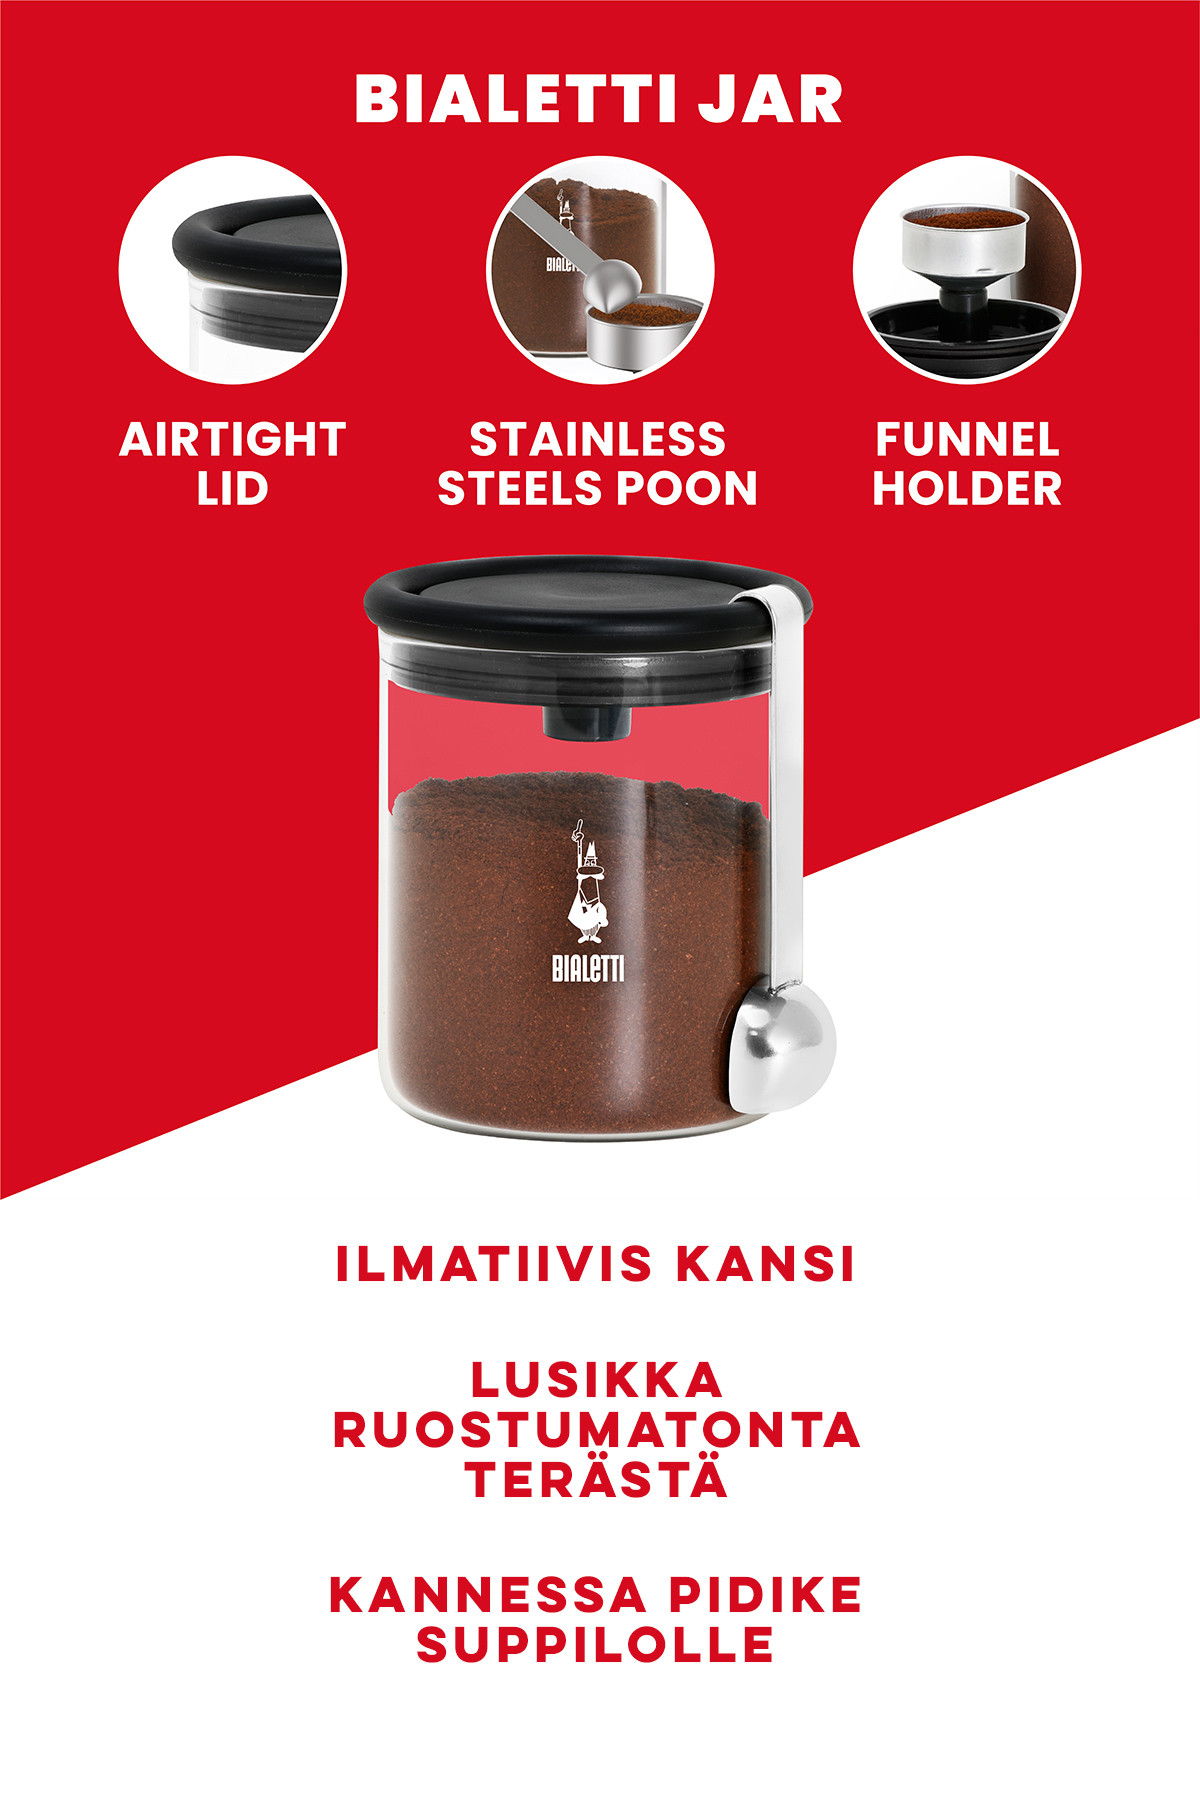 Coffee jar - Bialetti